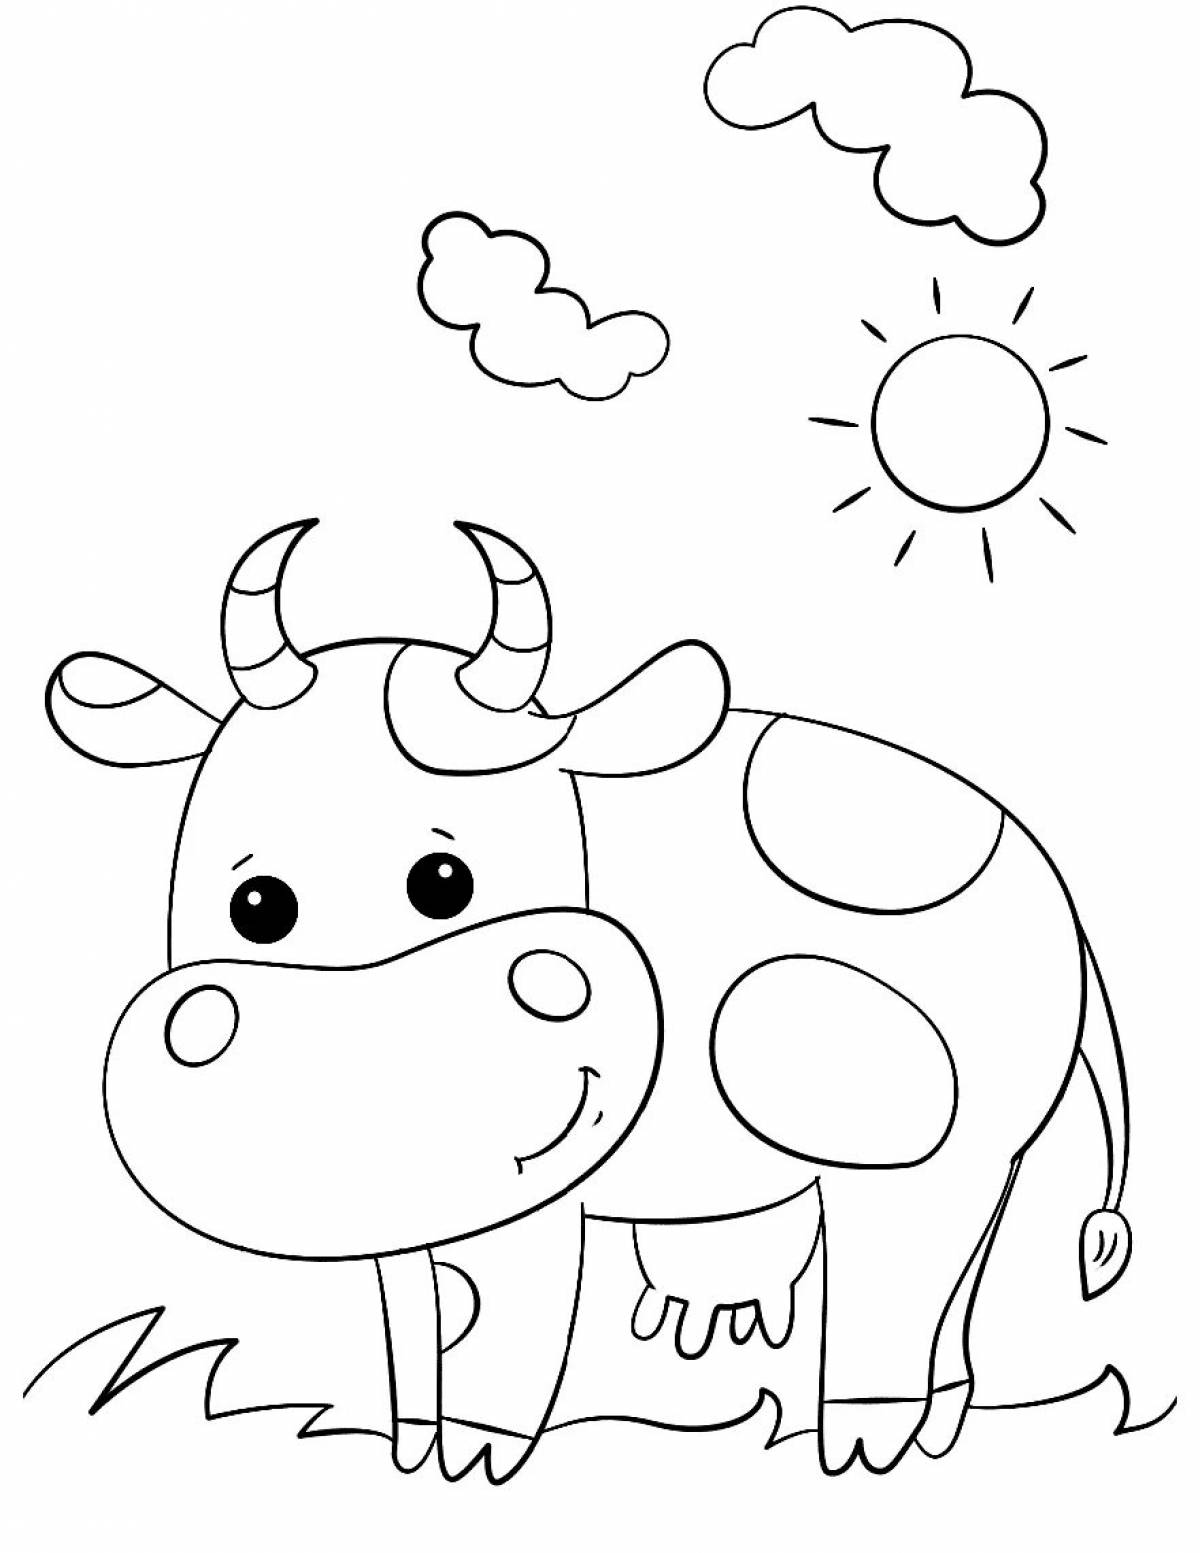 Забавная раскраска корова для малышей 2 3 лет